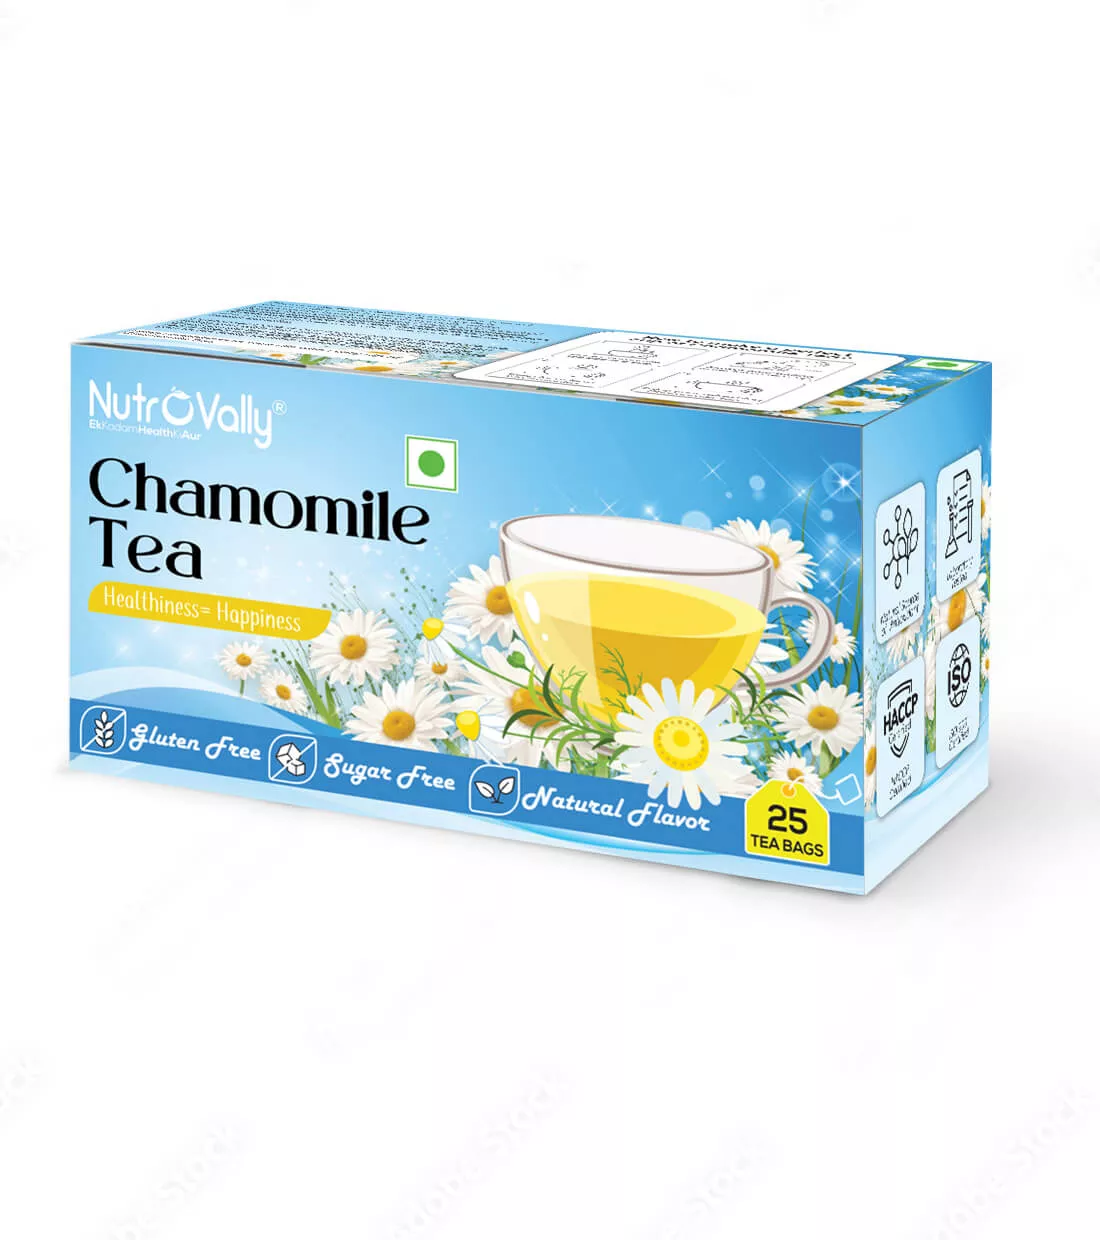 Chamomile Tea: Beyond the Bedtime Narrative